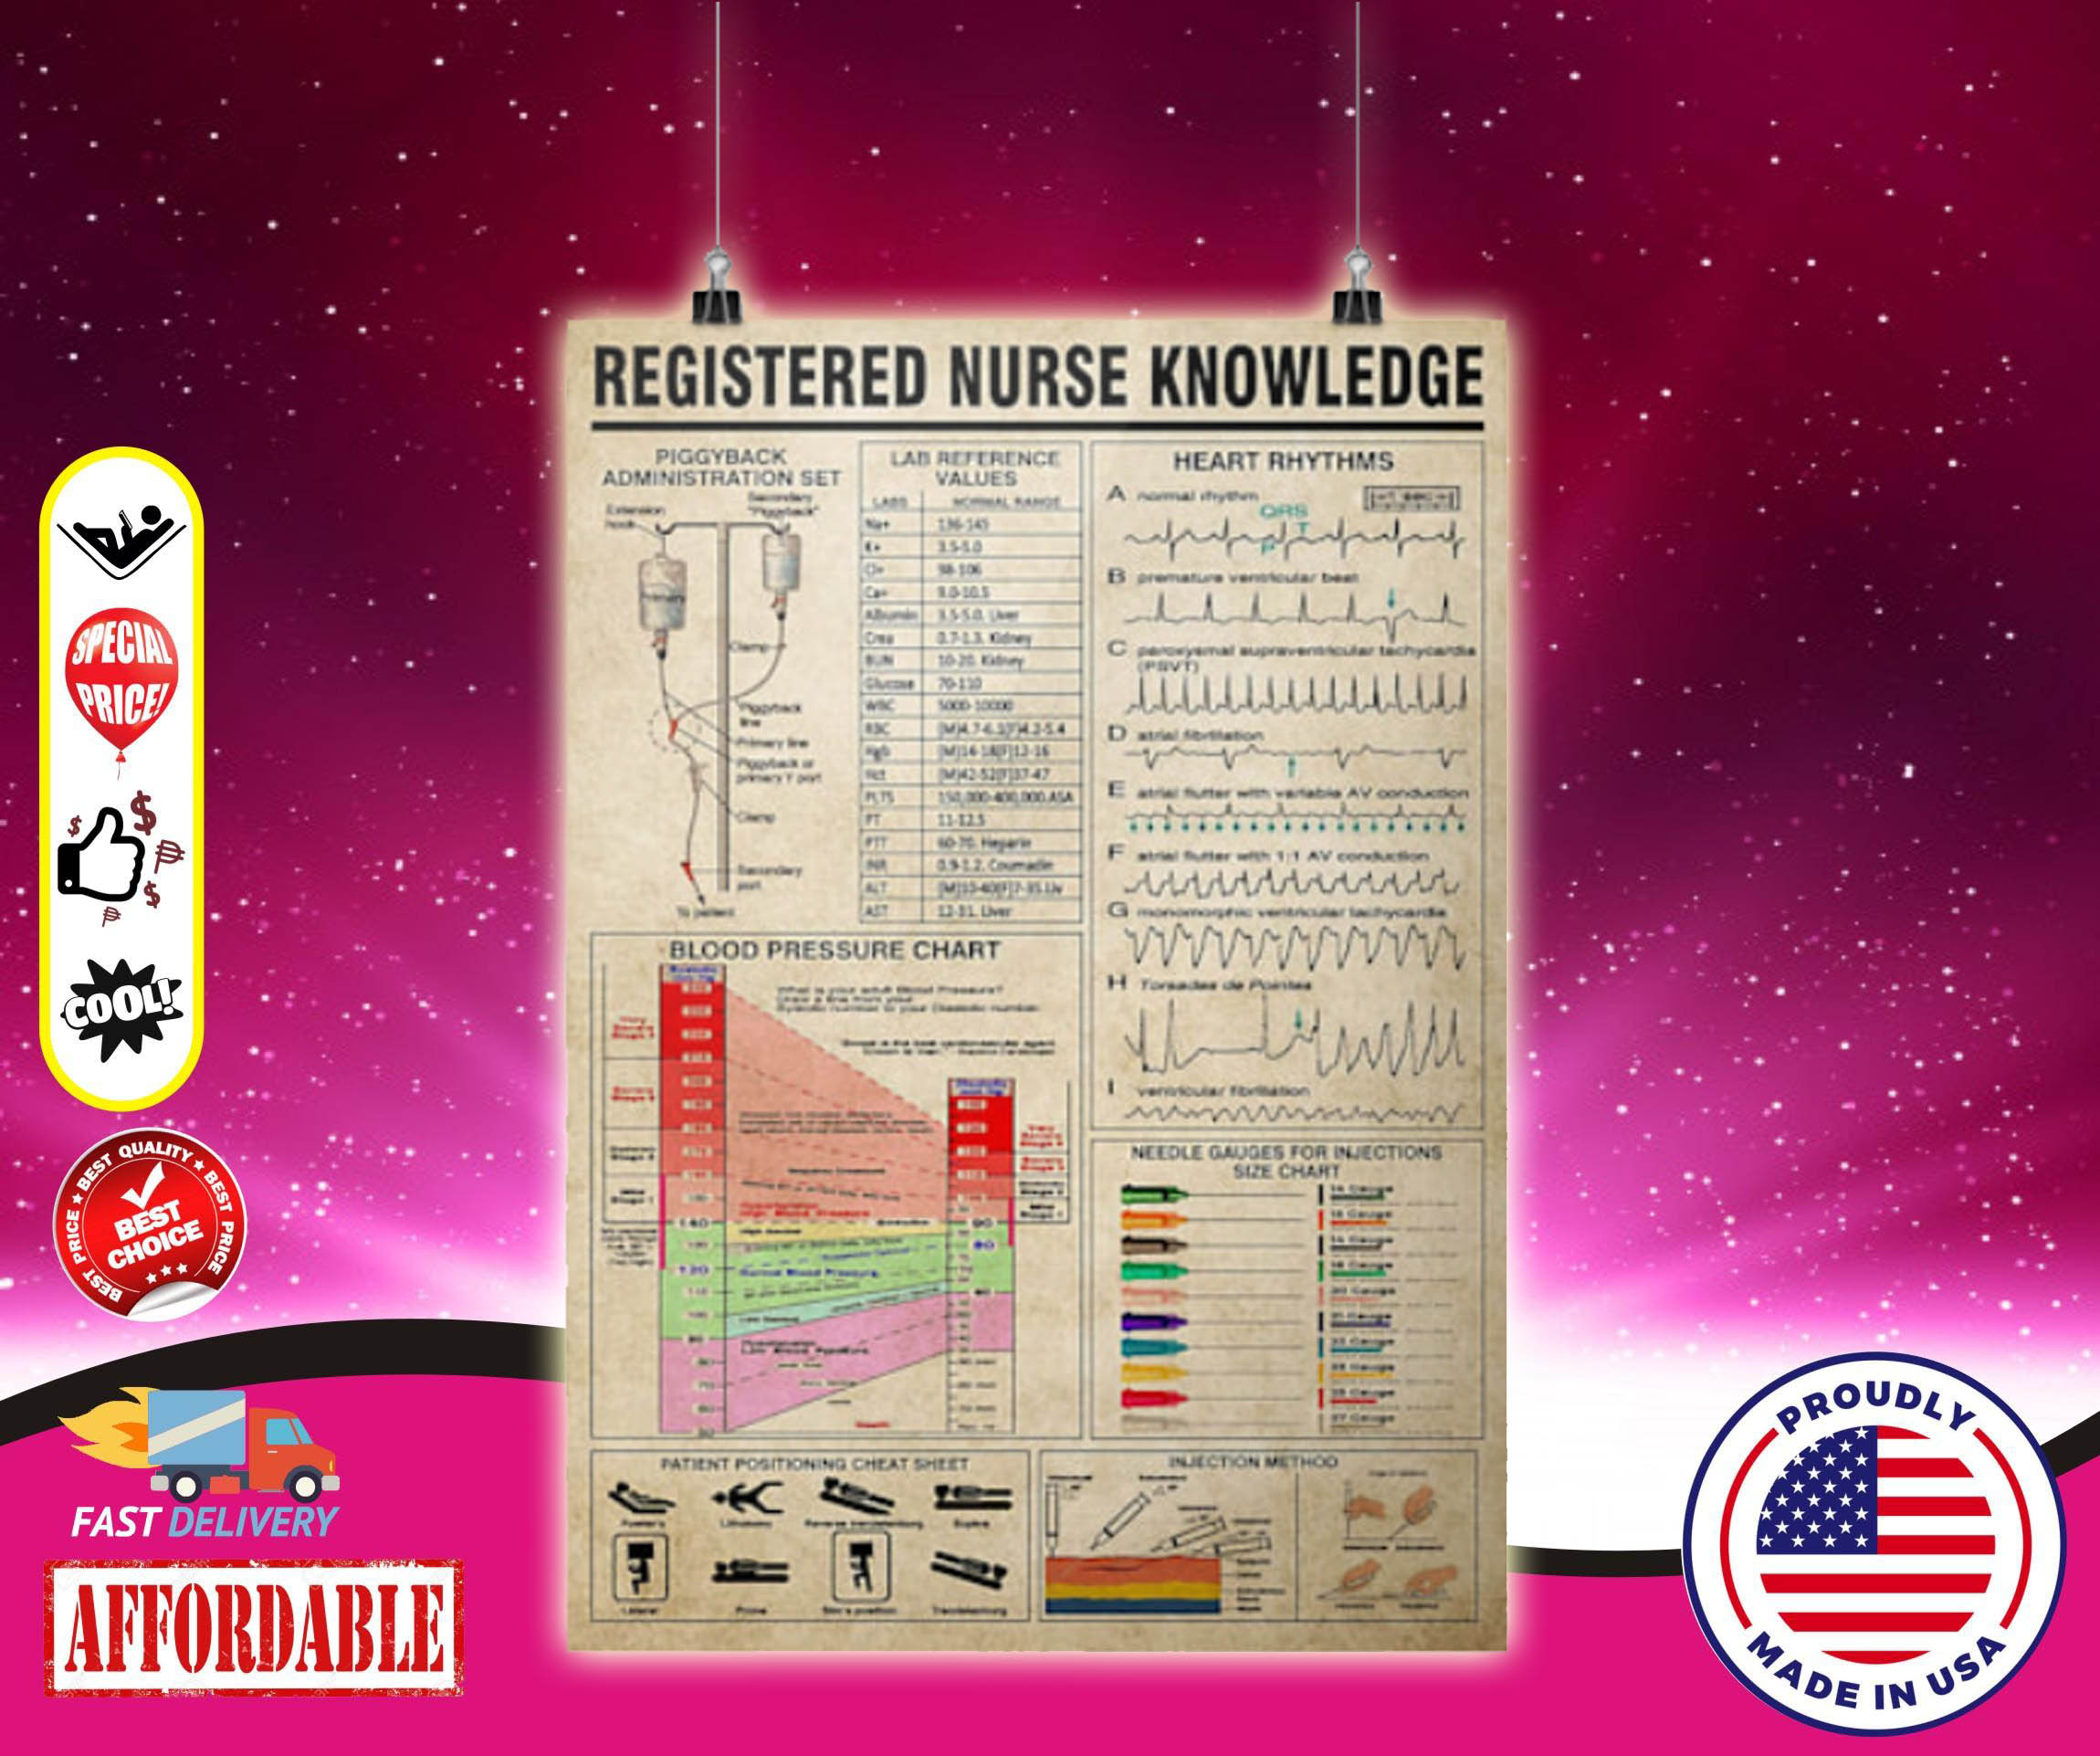 Registered nurse knowledge poster 3